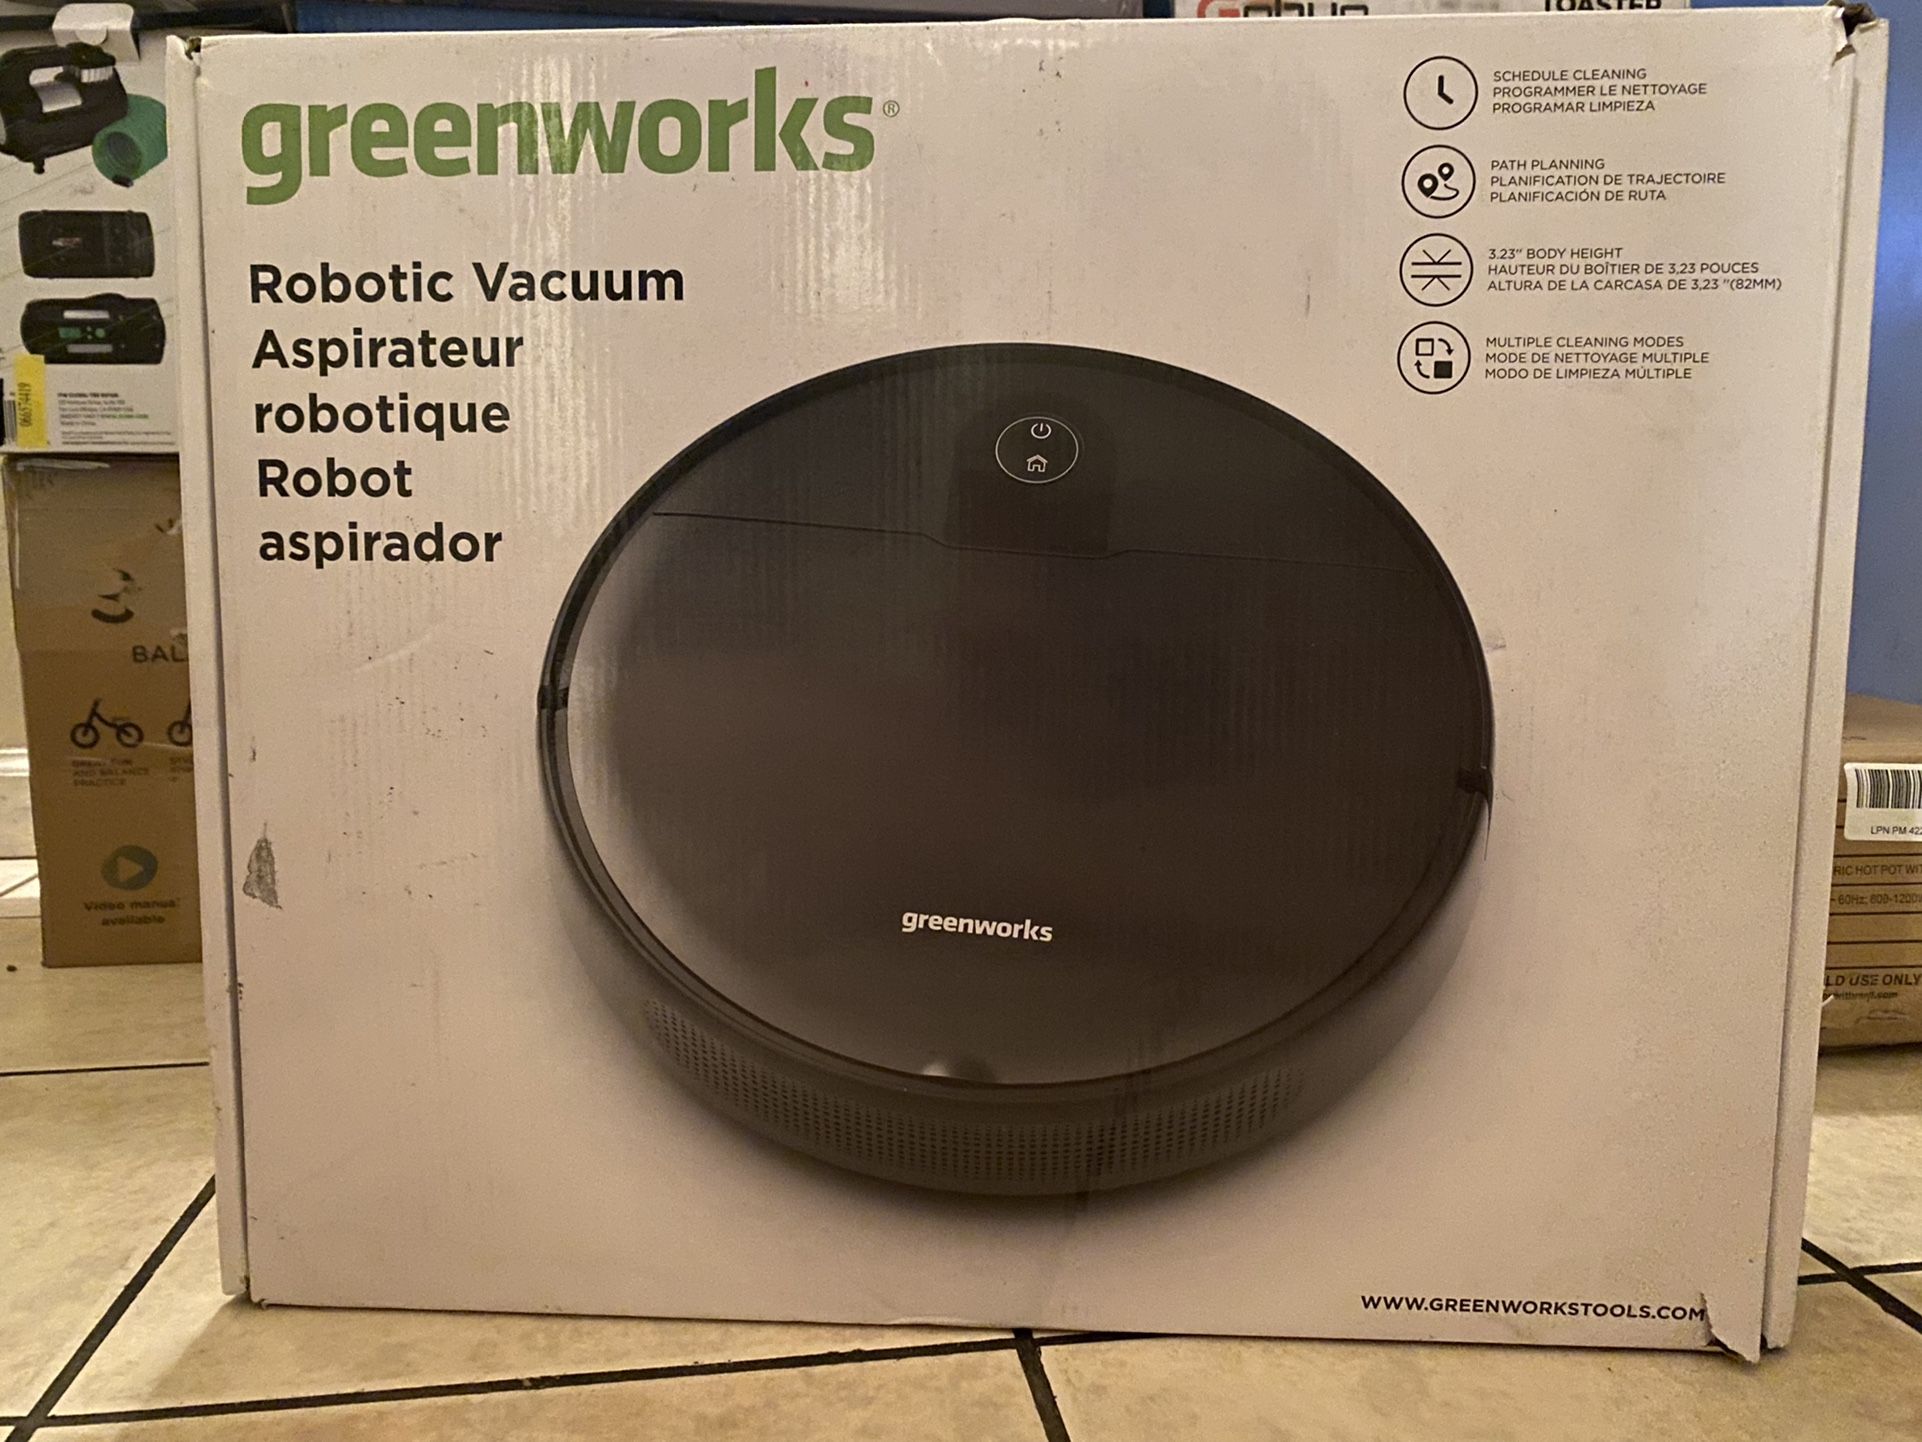 Robotic Vacuum (green works)